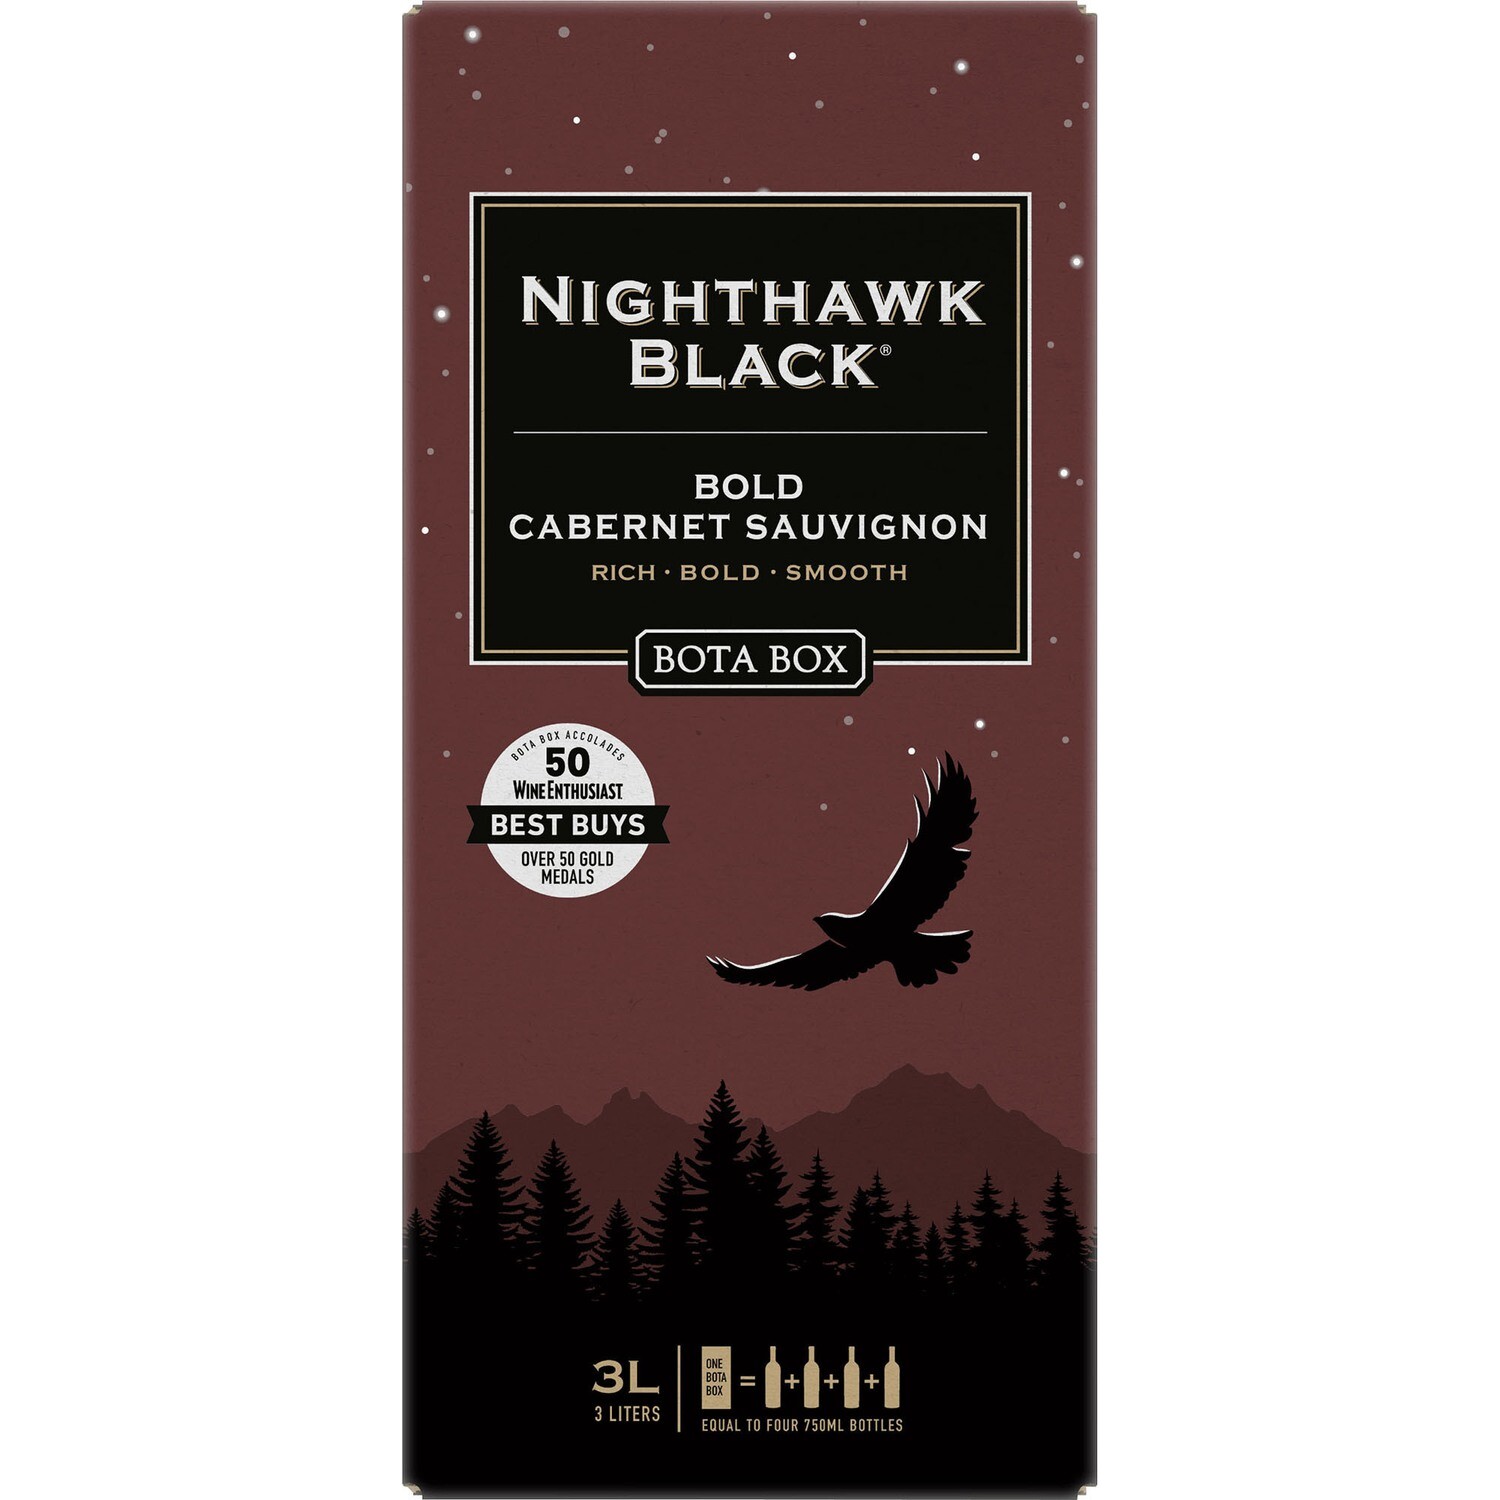 Nighthawk Black Cab Sauv 3L